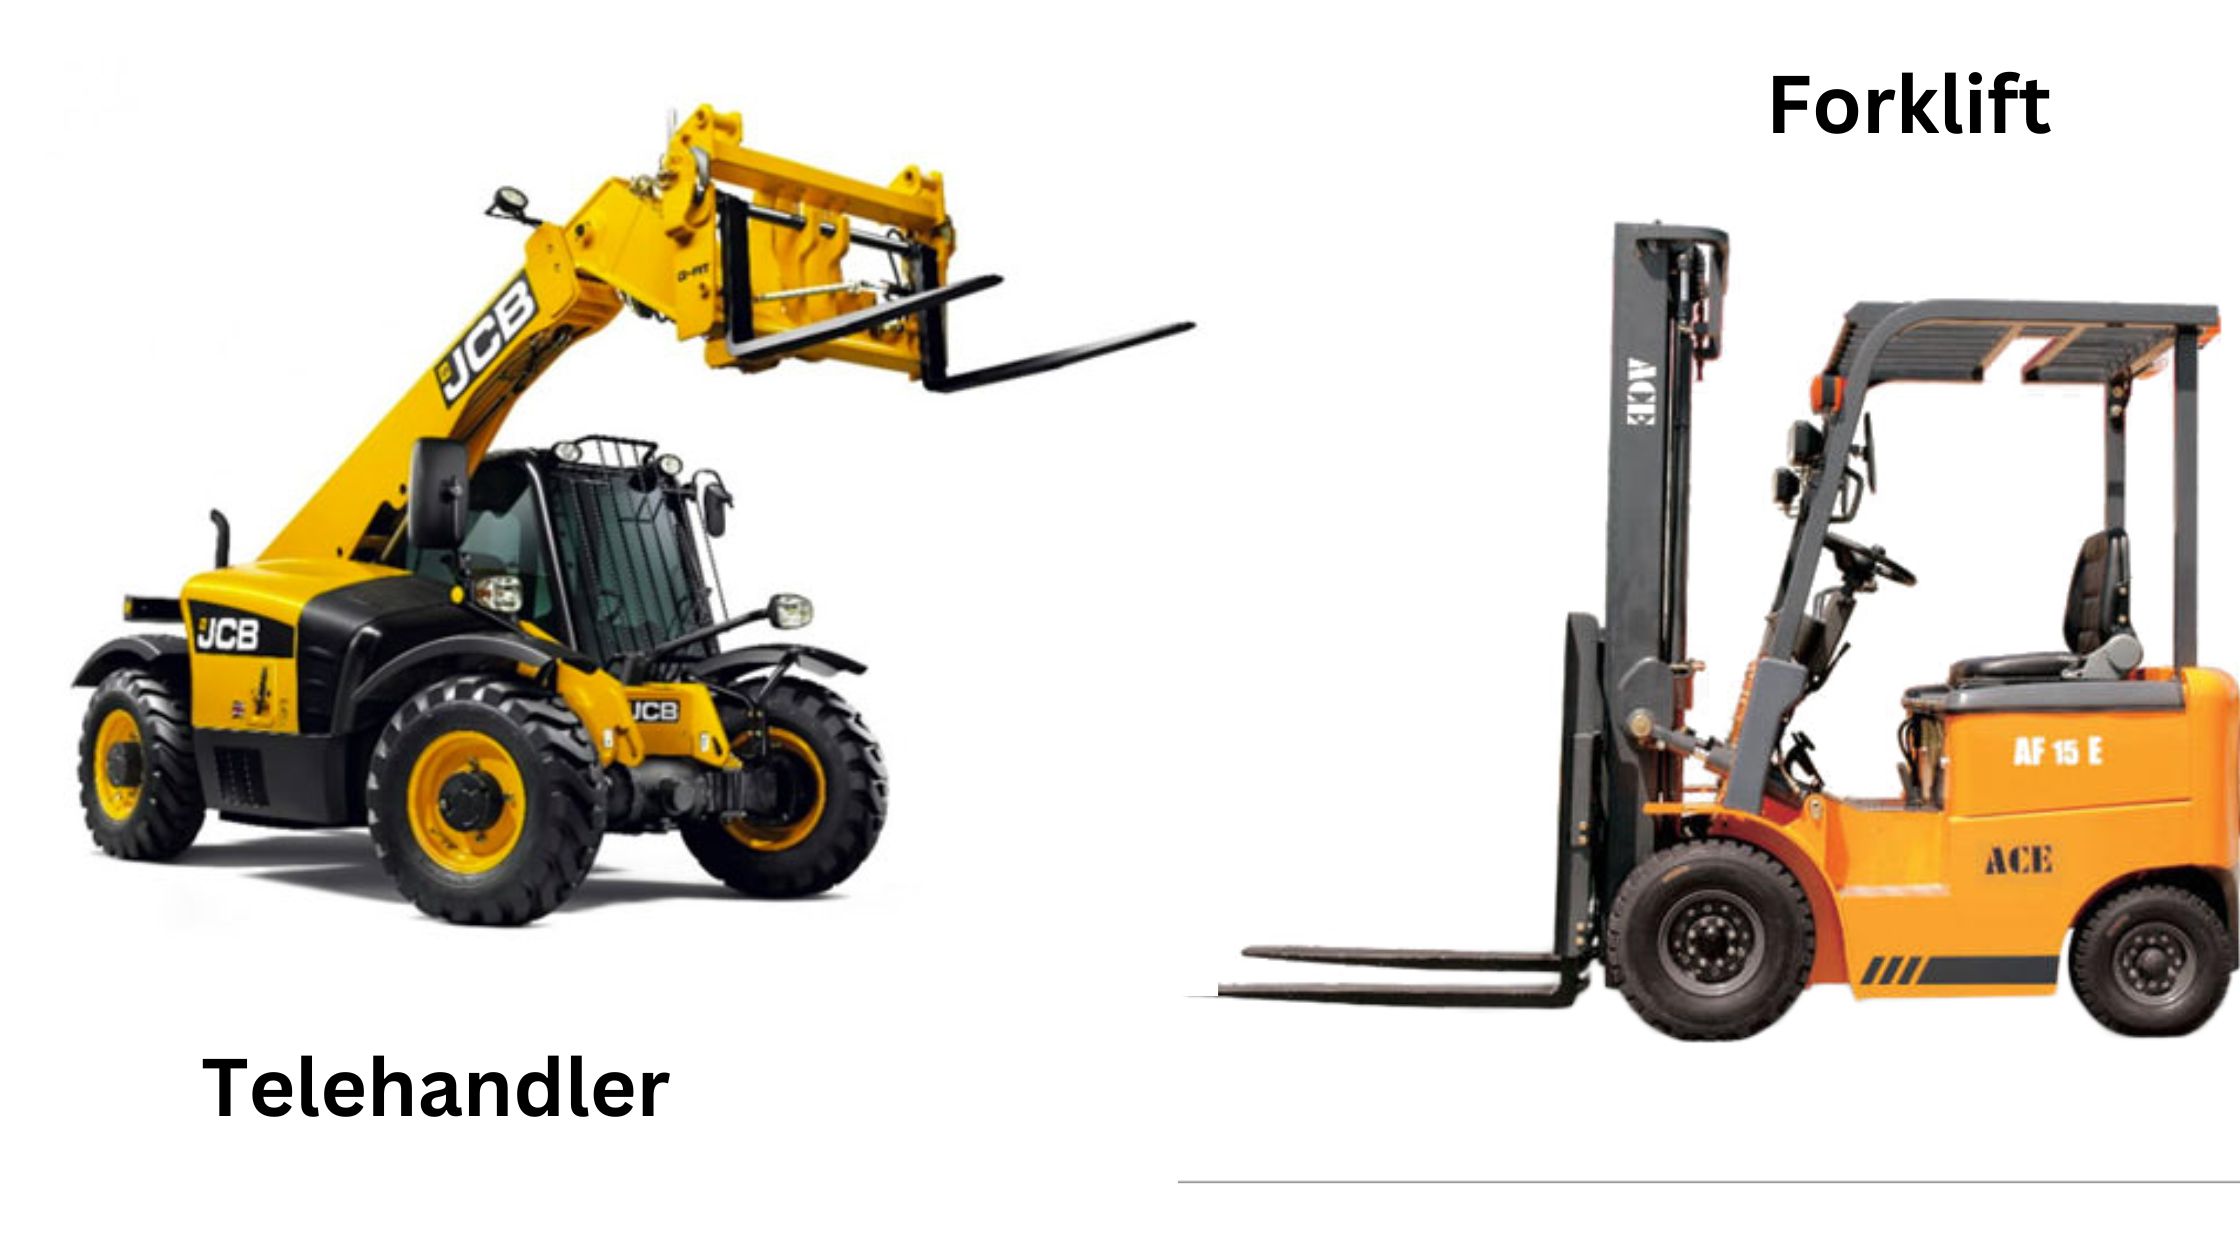 Top Options for Forklift & Telehandler in India